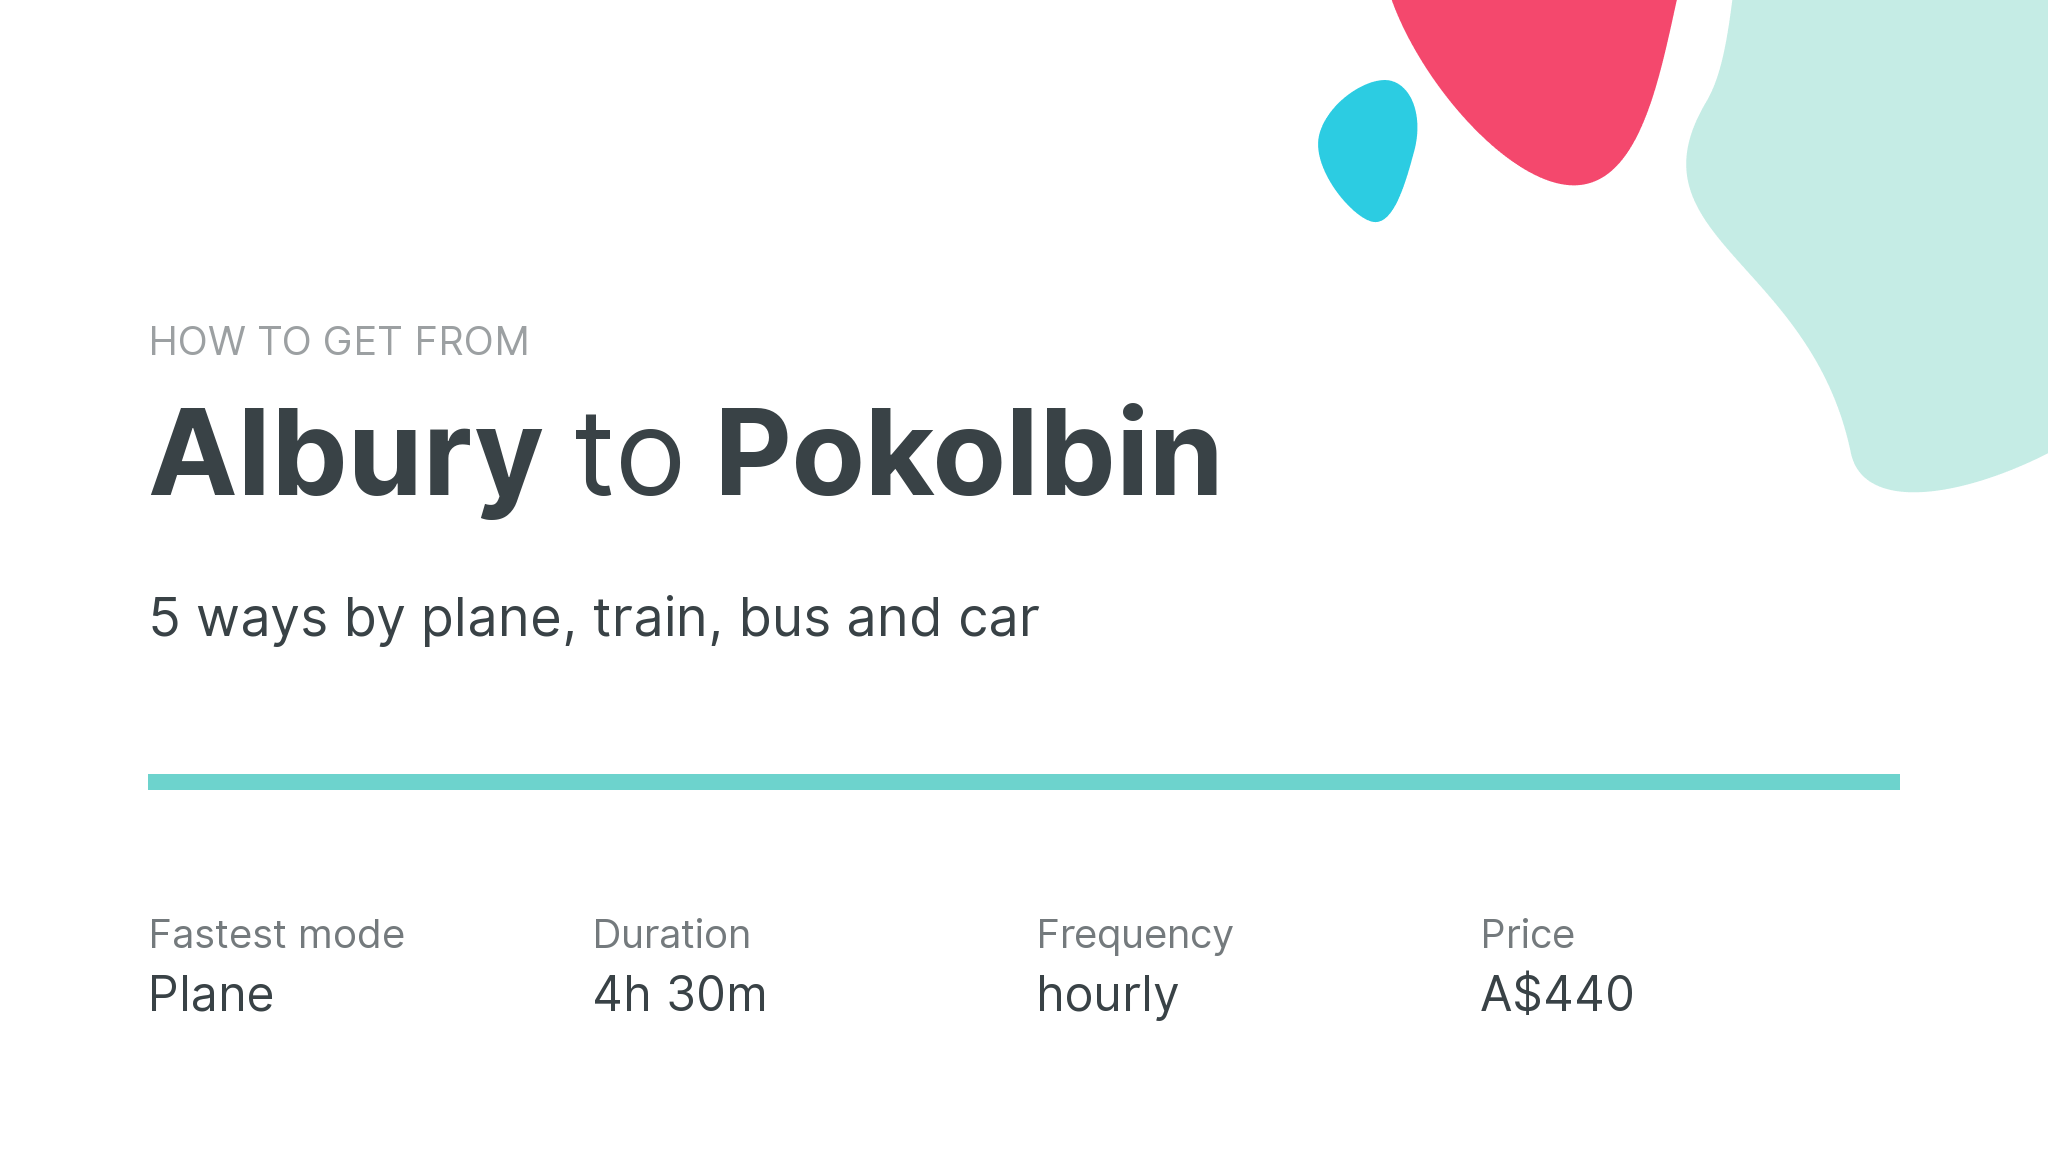 How do I get from Albury to Pokolbin